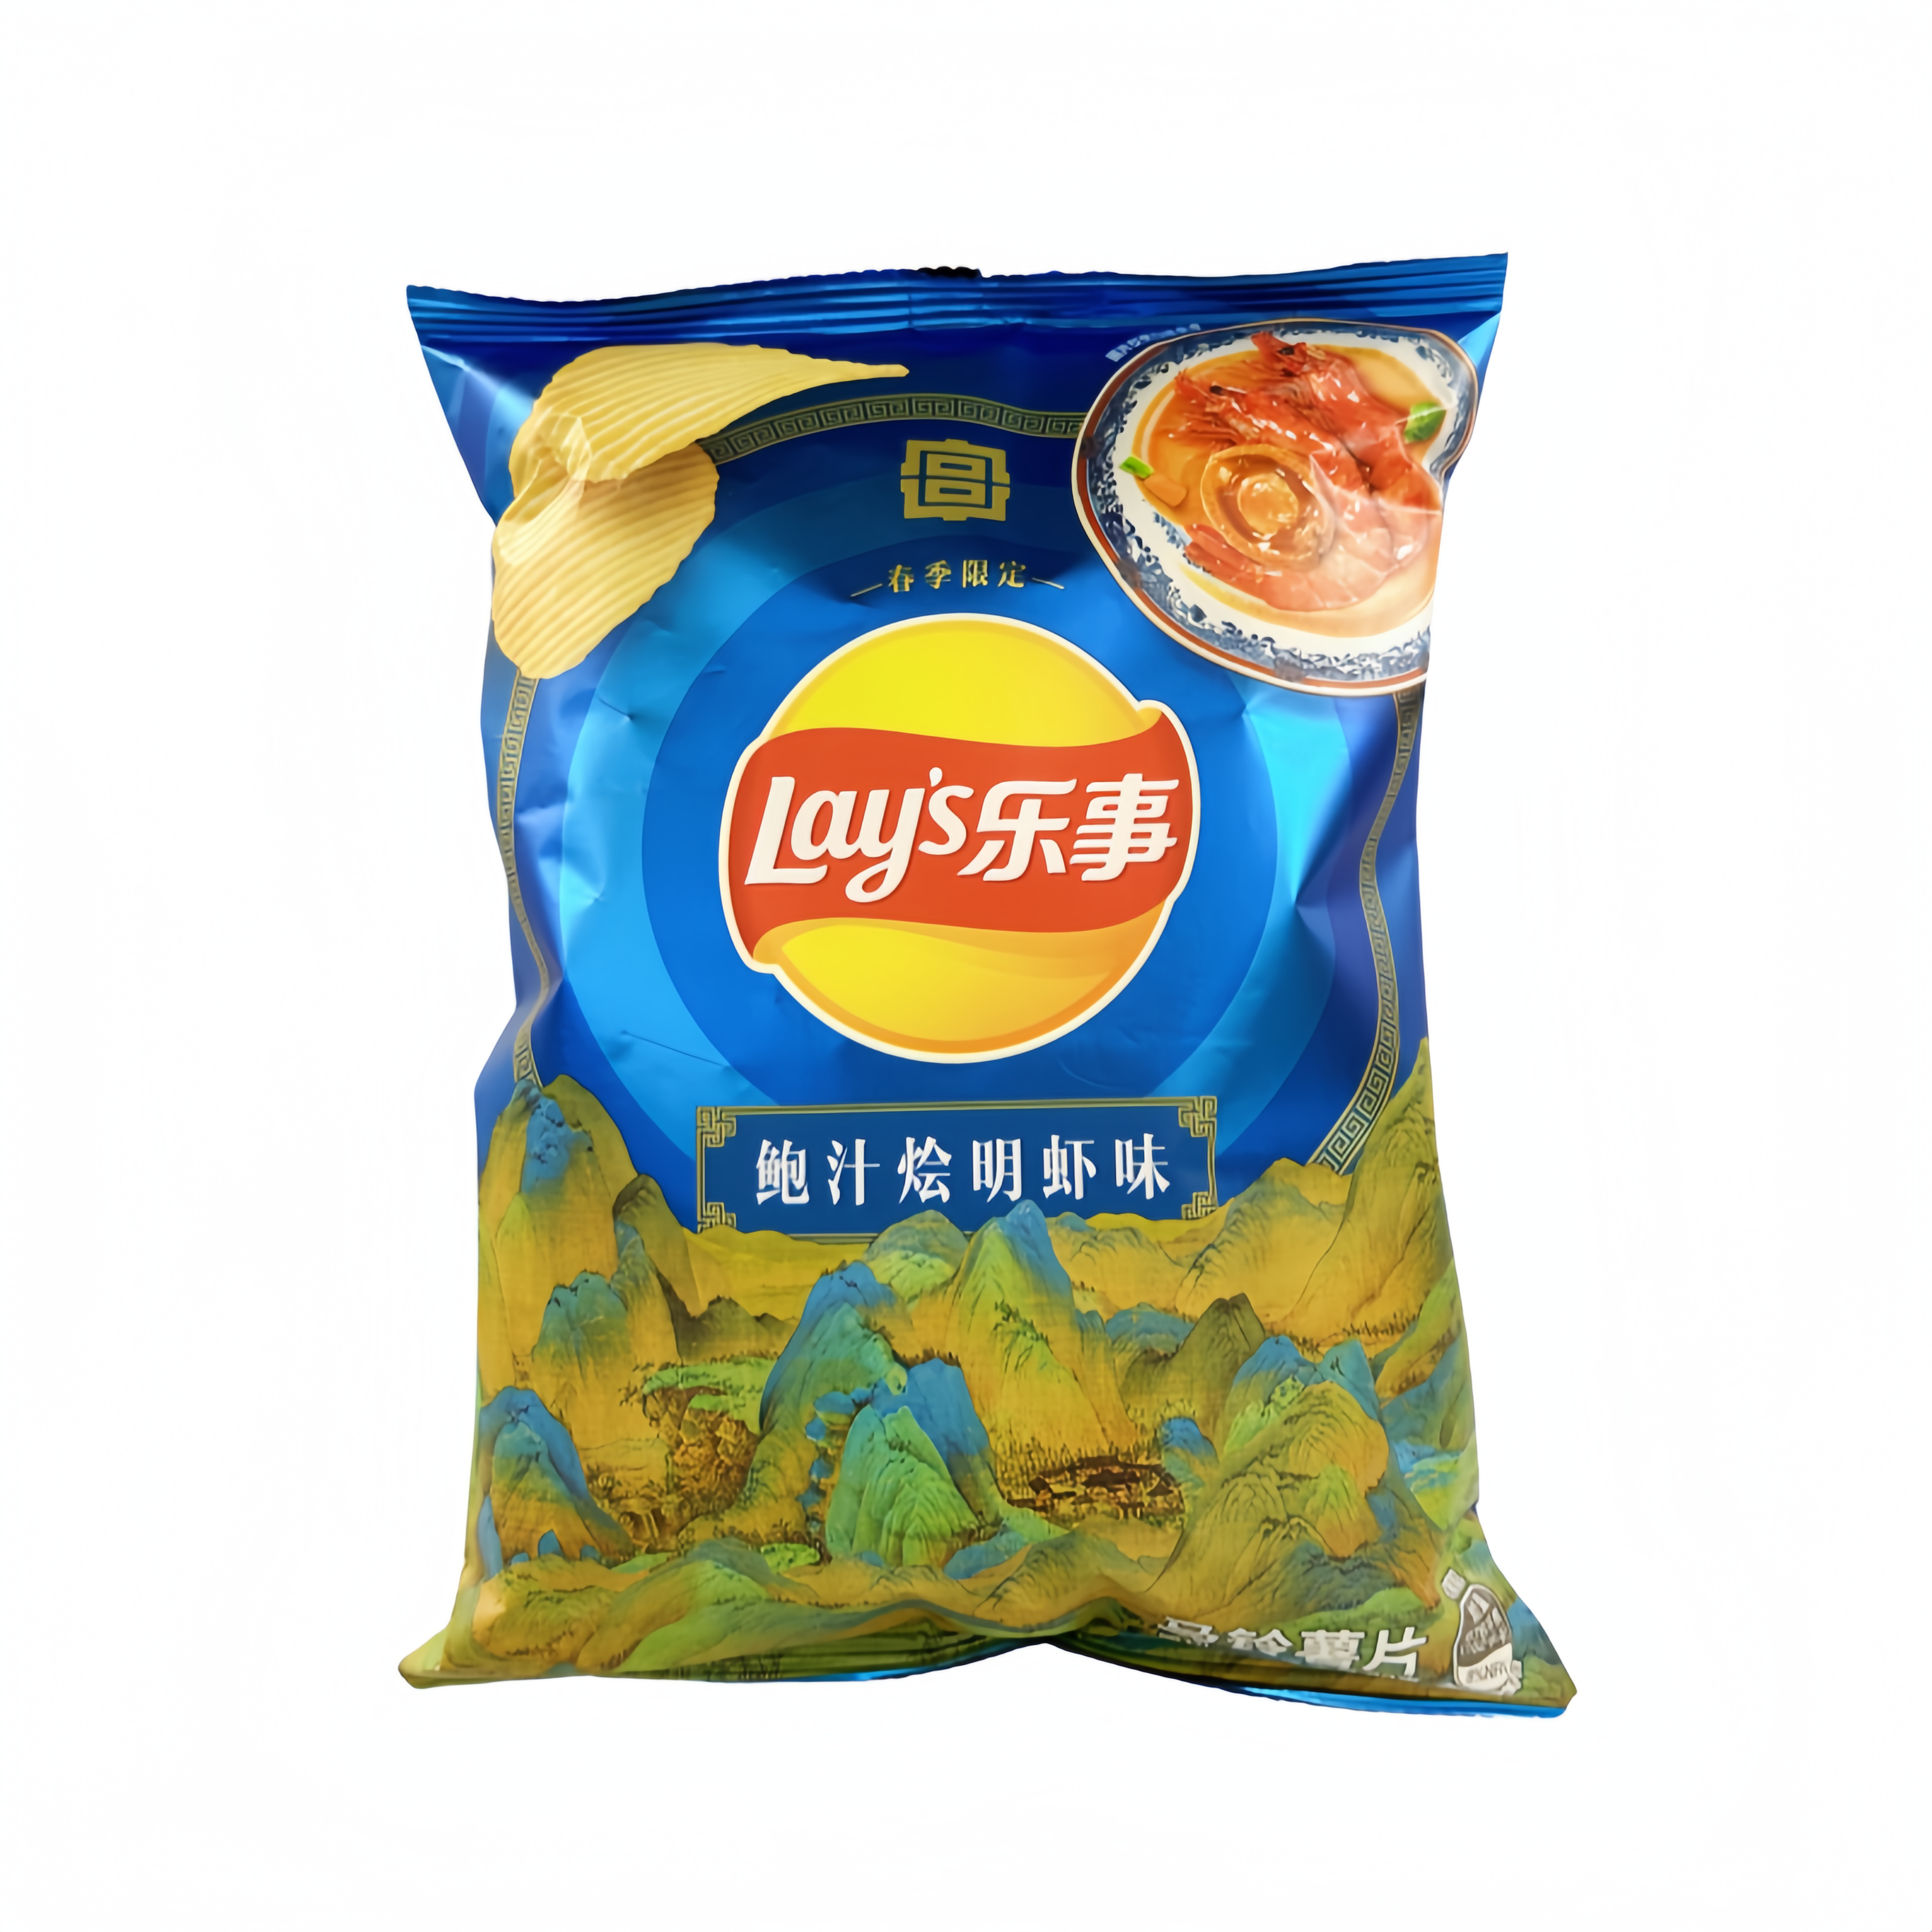 Potatischips Med Abalone Braises Räksmak 70g Lay's Kina